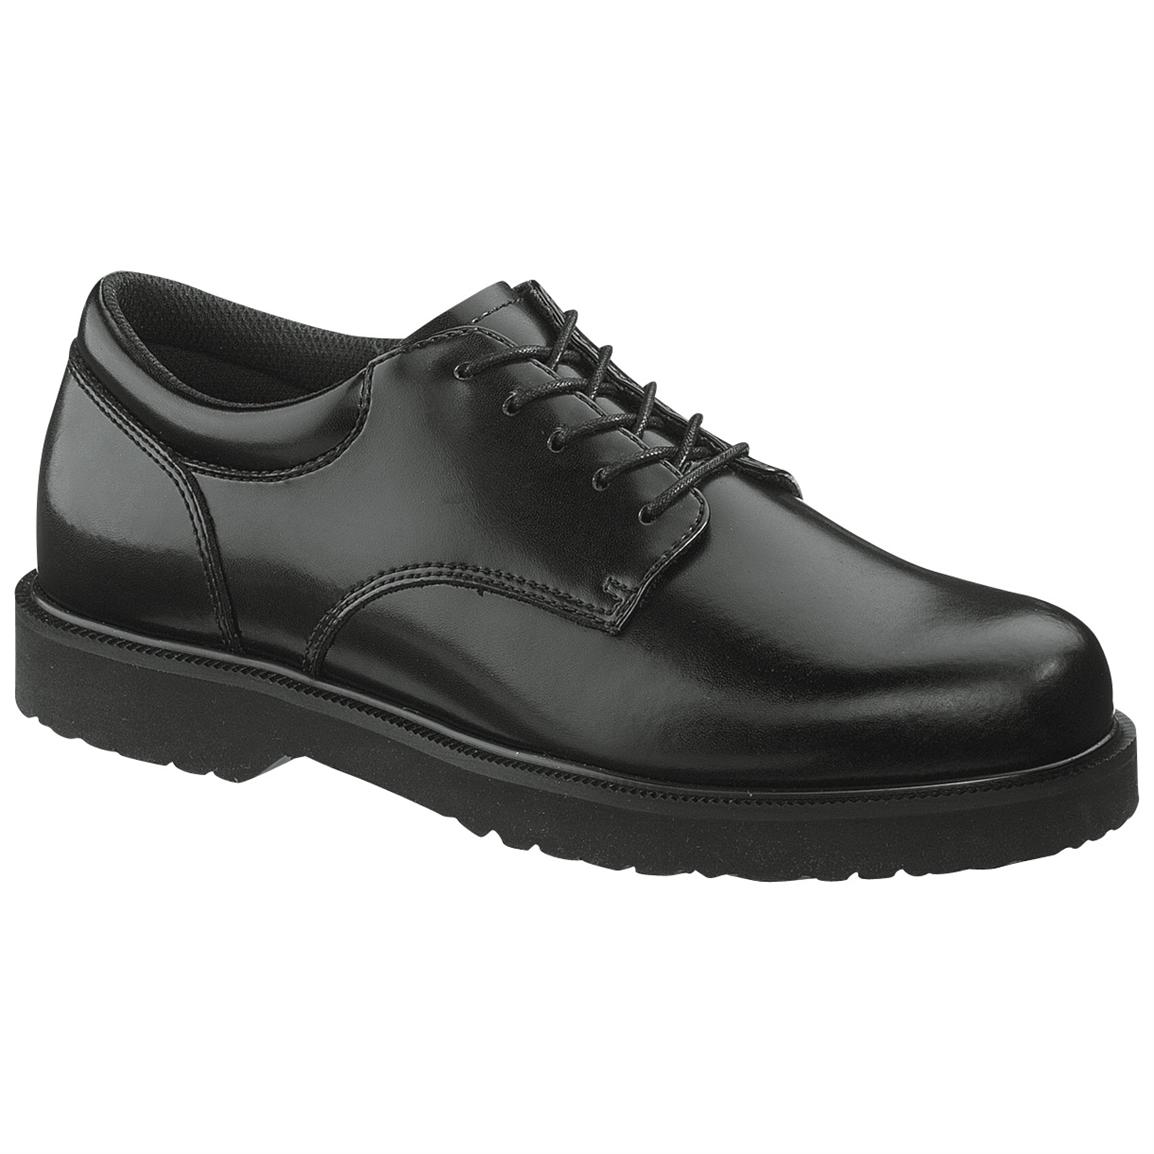 Men's Bates® High-shine Duty Oxford Shoes, Black - 213426, Dress Shoes